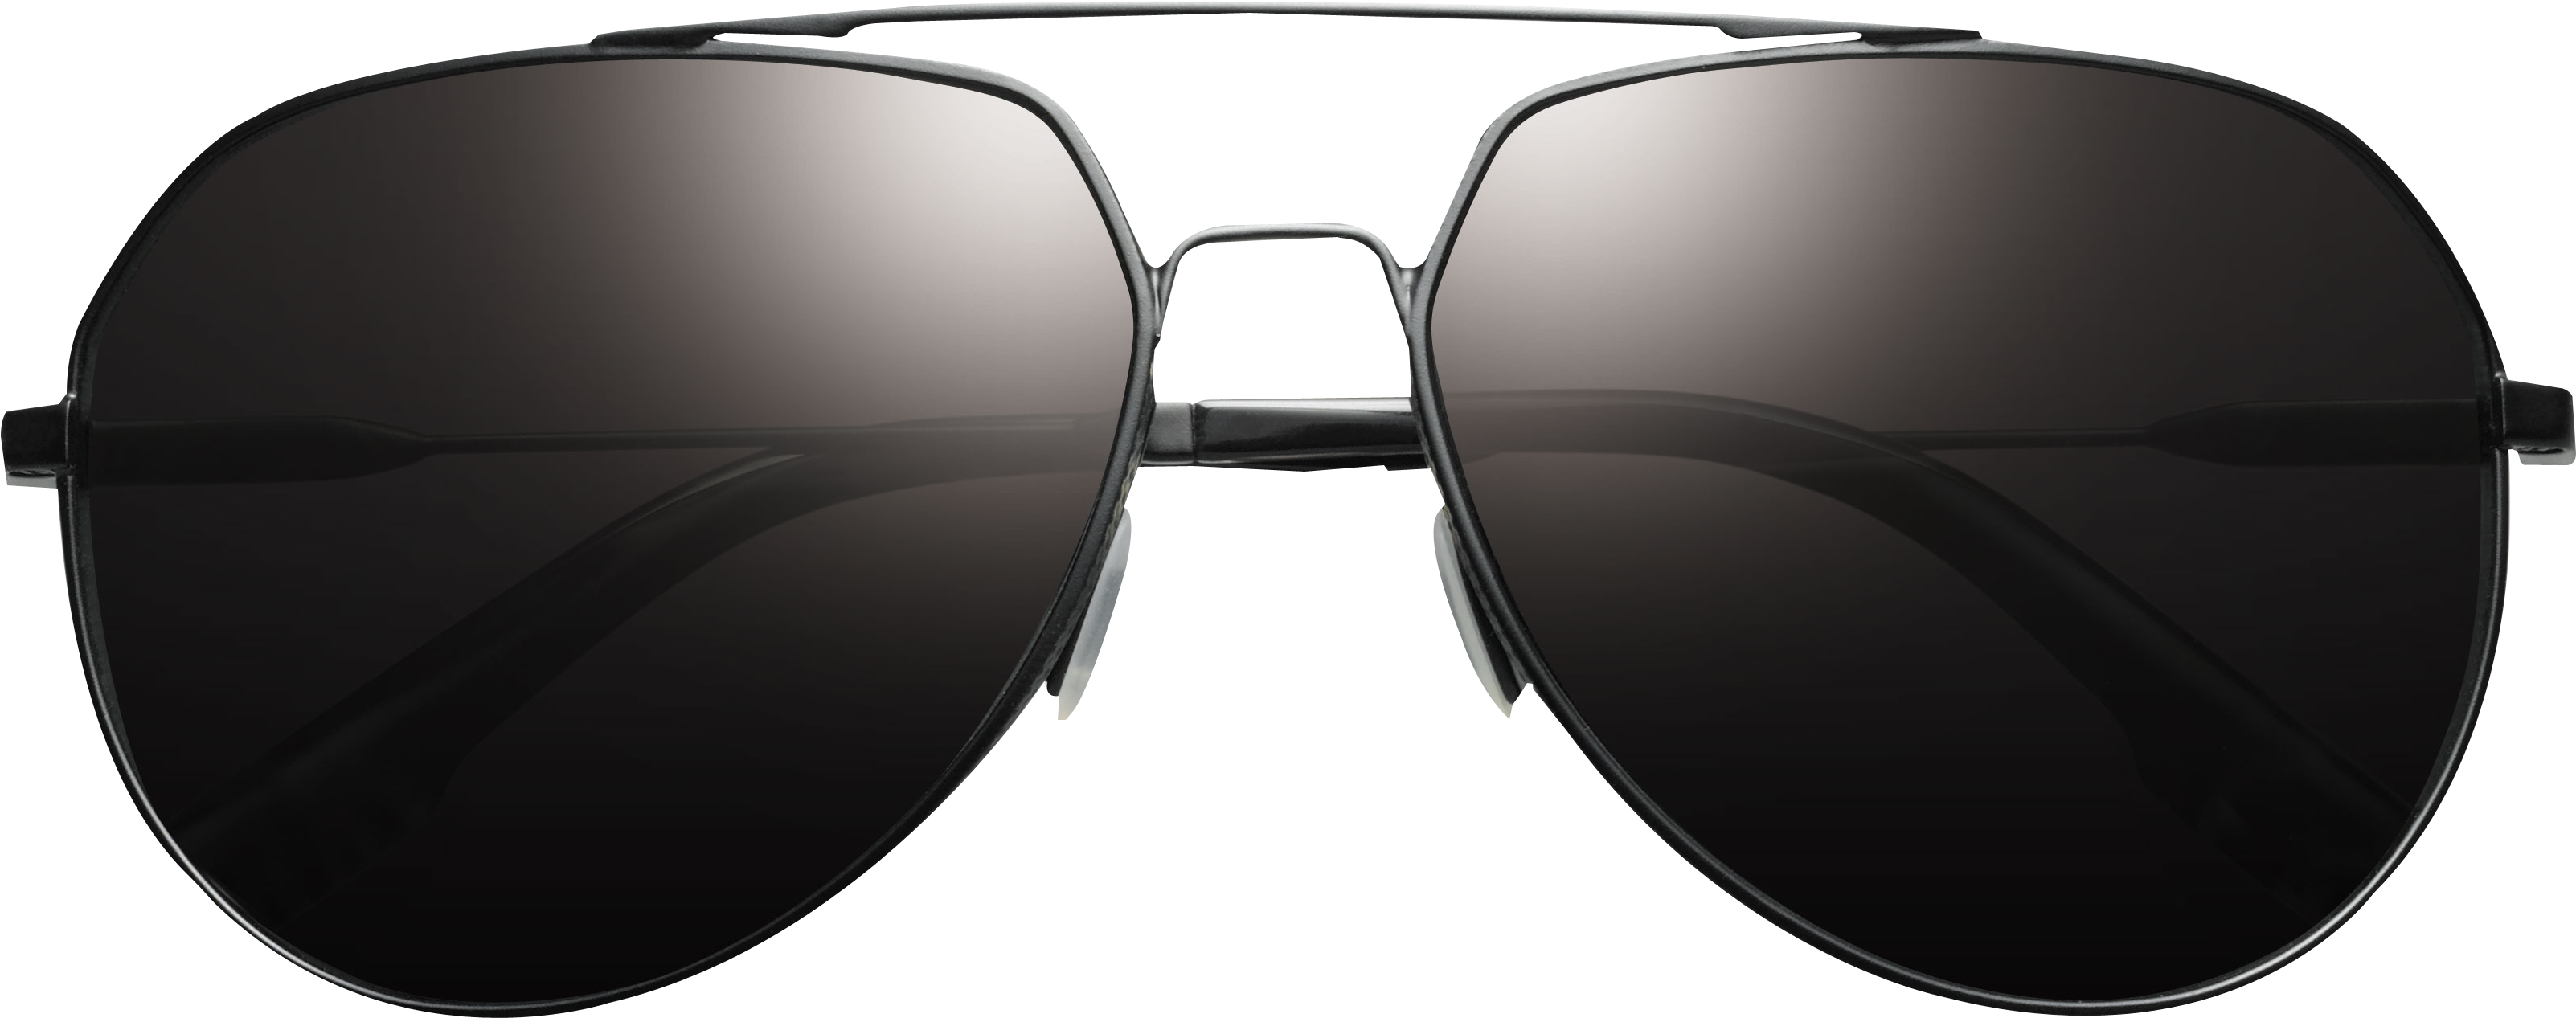 Aviator Sunglasses Clip Art Transparent Background Sunglasses Black - Clip  Art Library